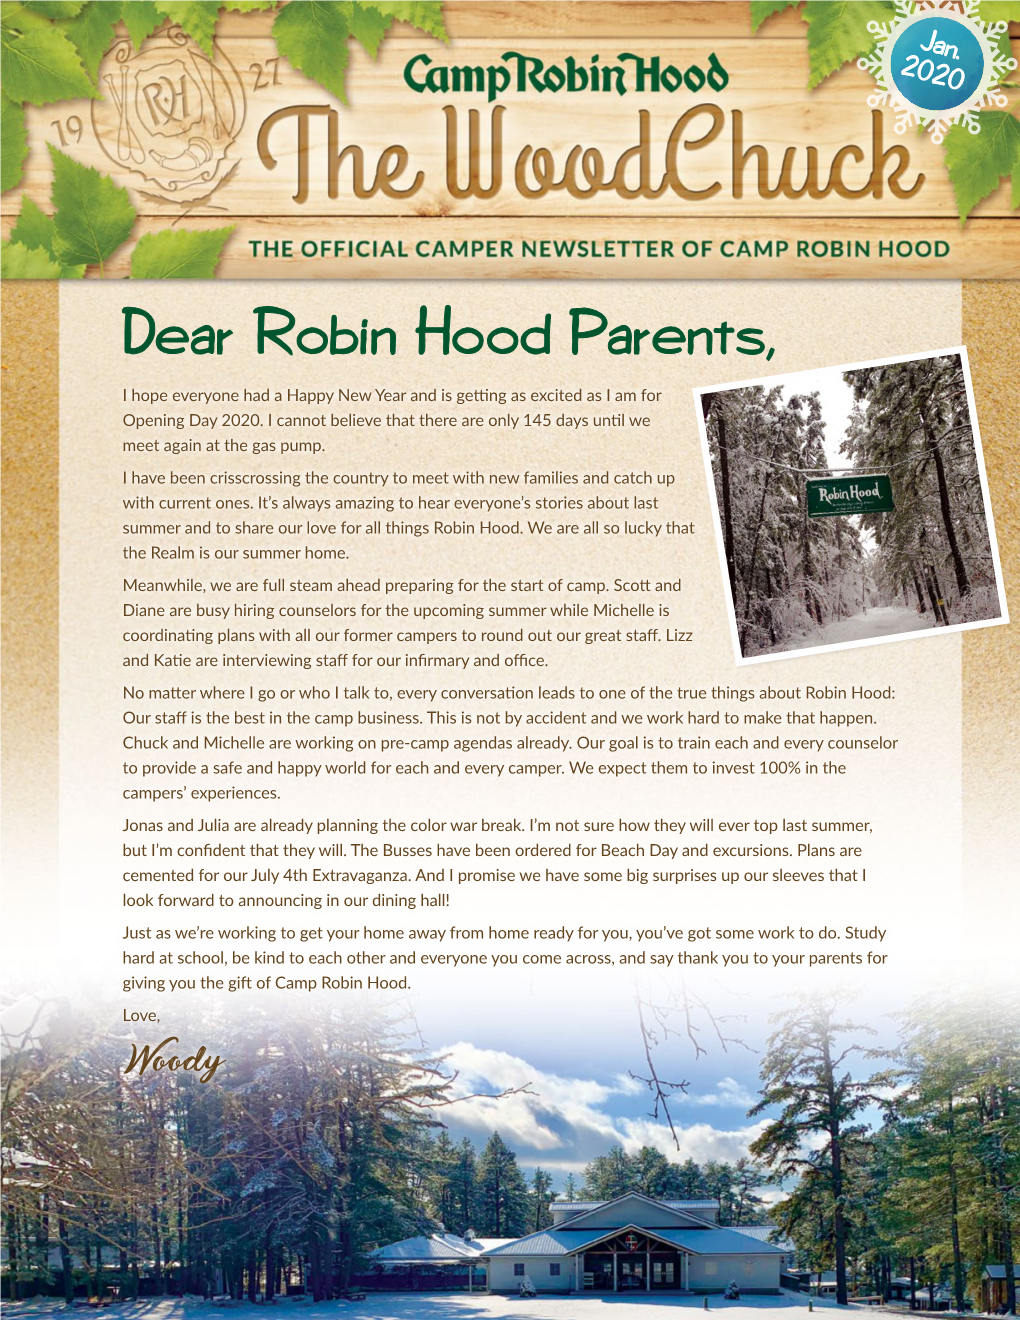 Dear Robin Hood Parents